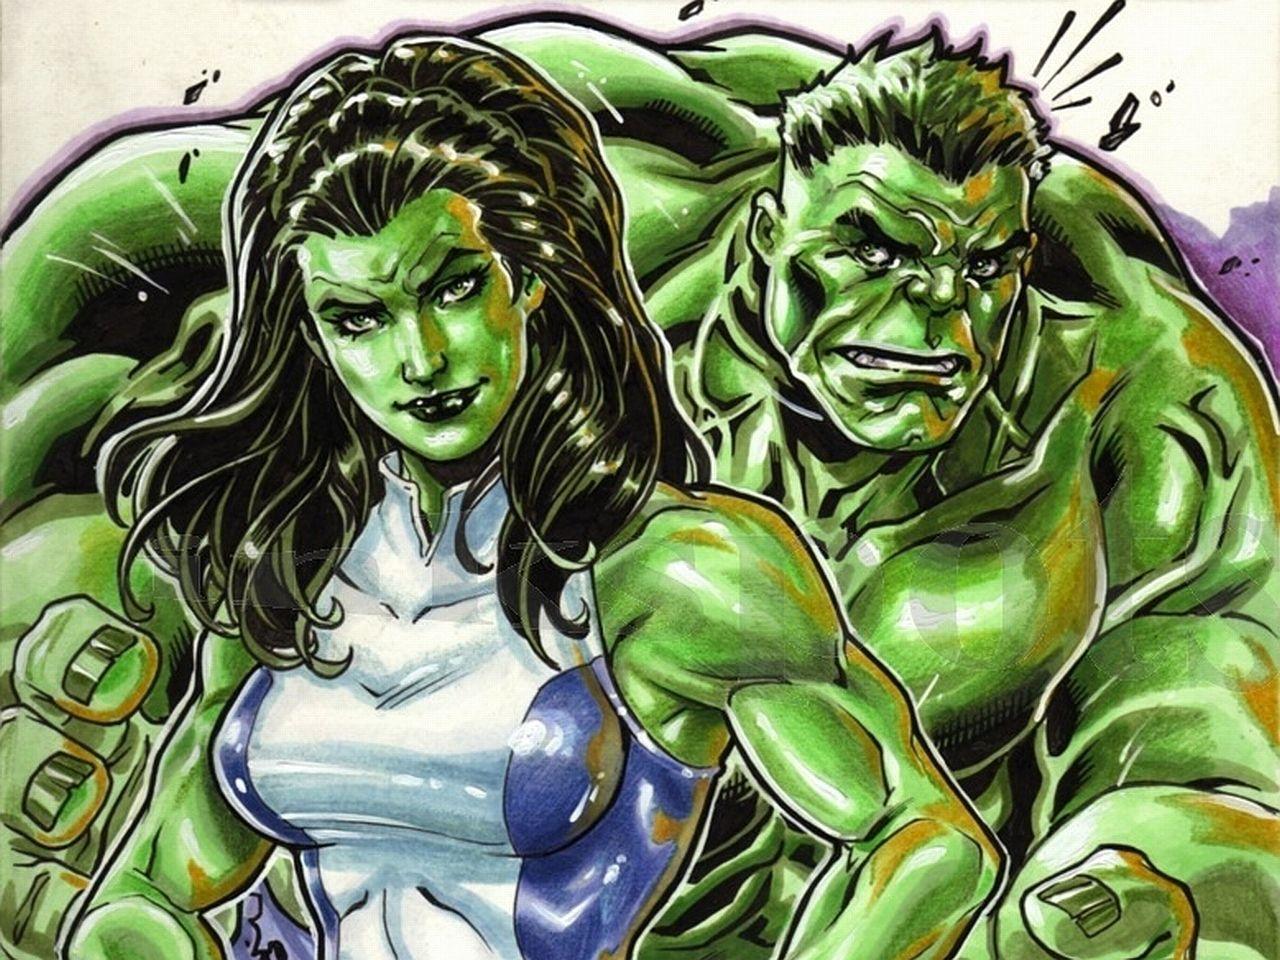 She-Hulk 2020 Wallpapers